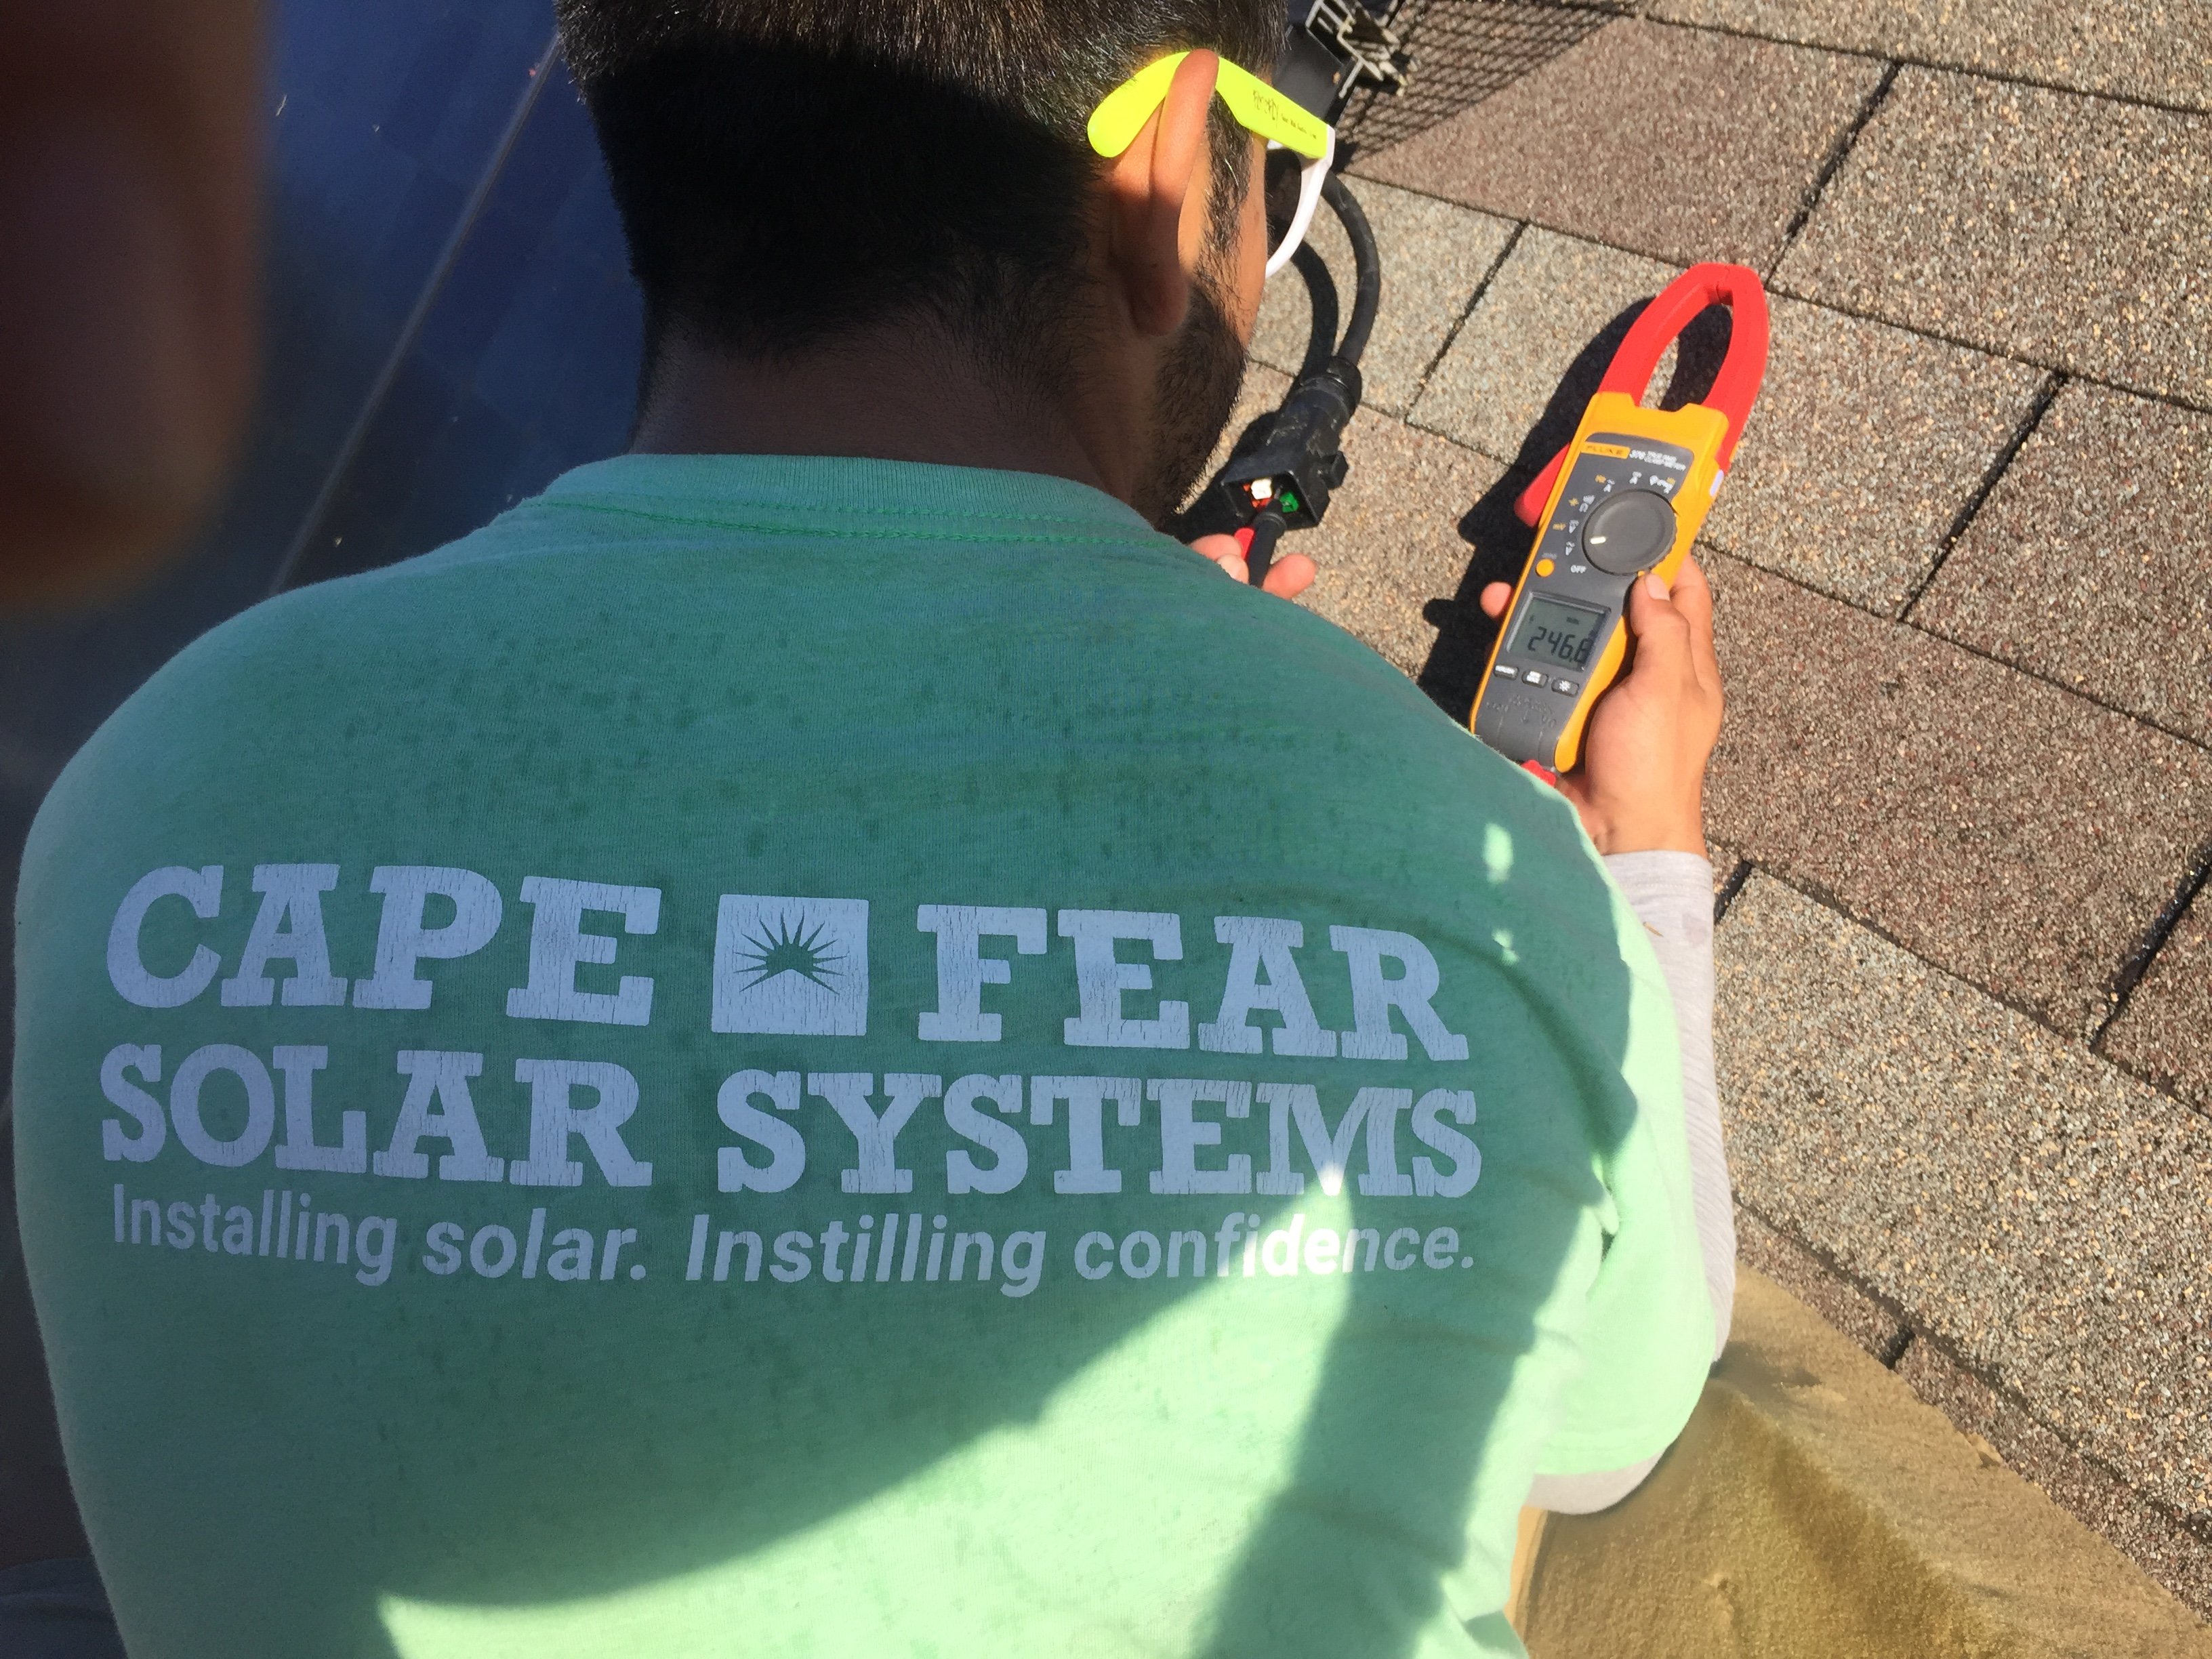 Imagem cortesia de Cape Fear Solar Systems